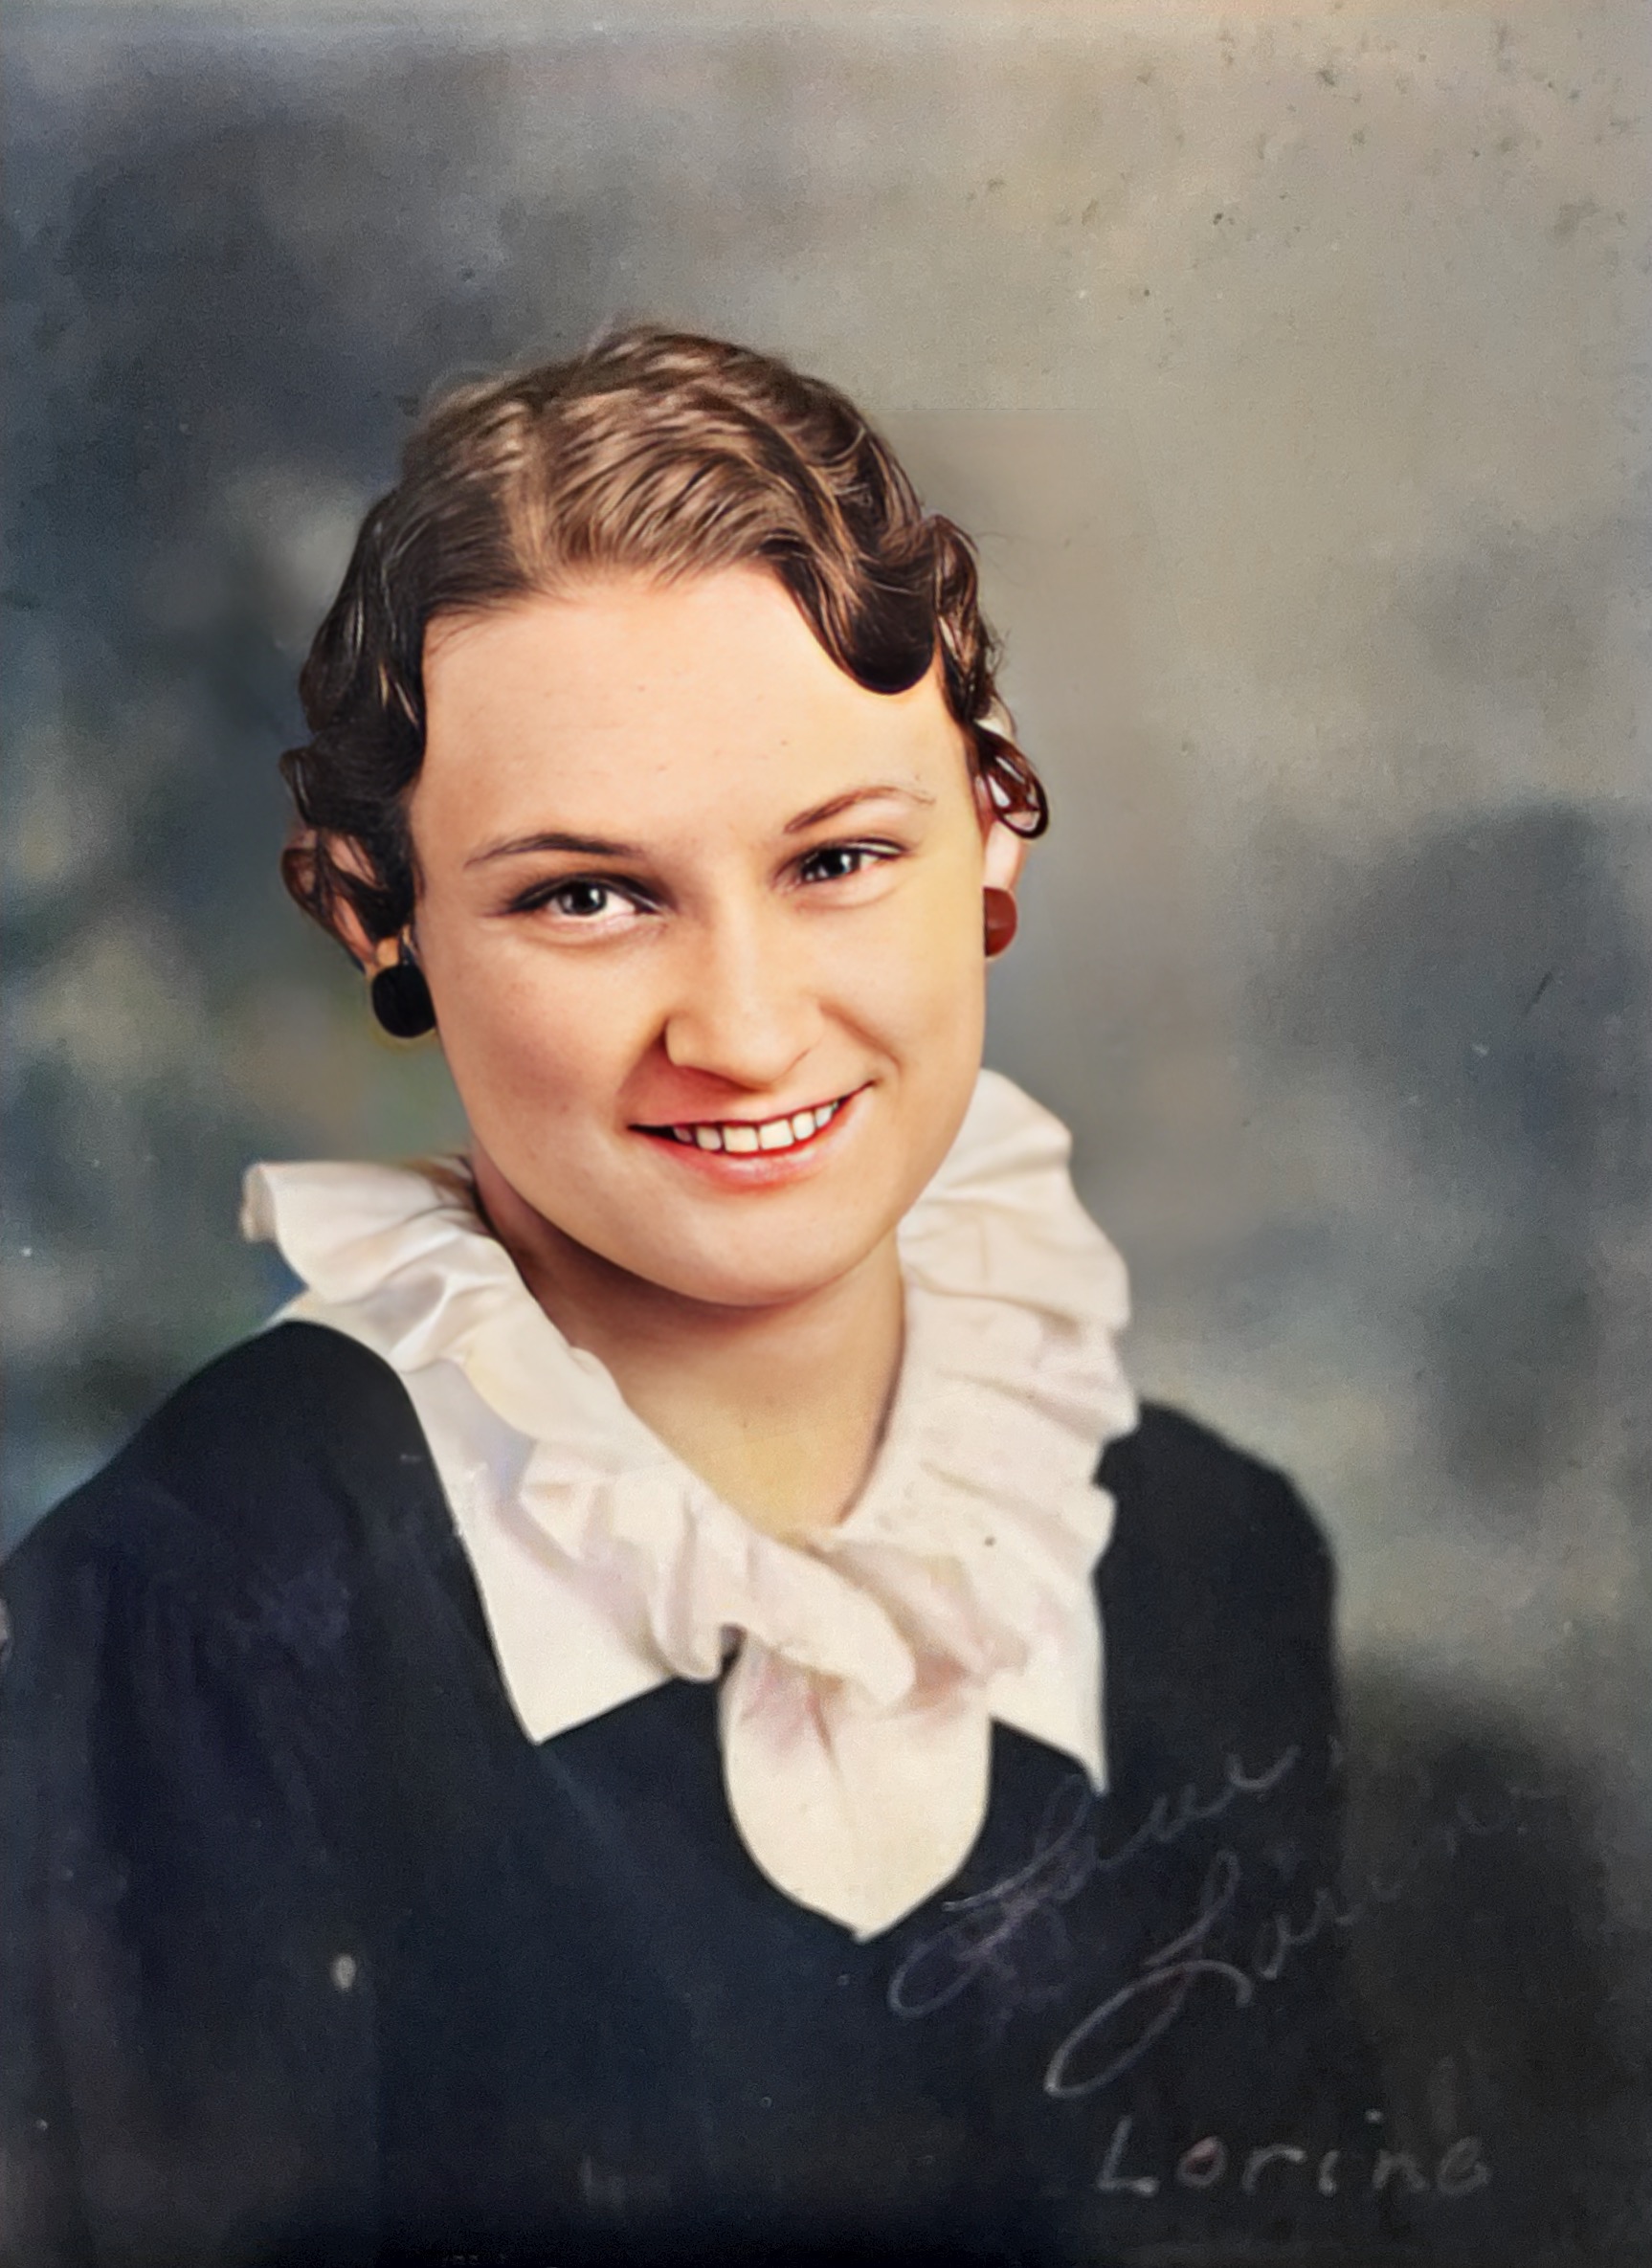 Lorene Killett High School graduation 1933